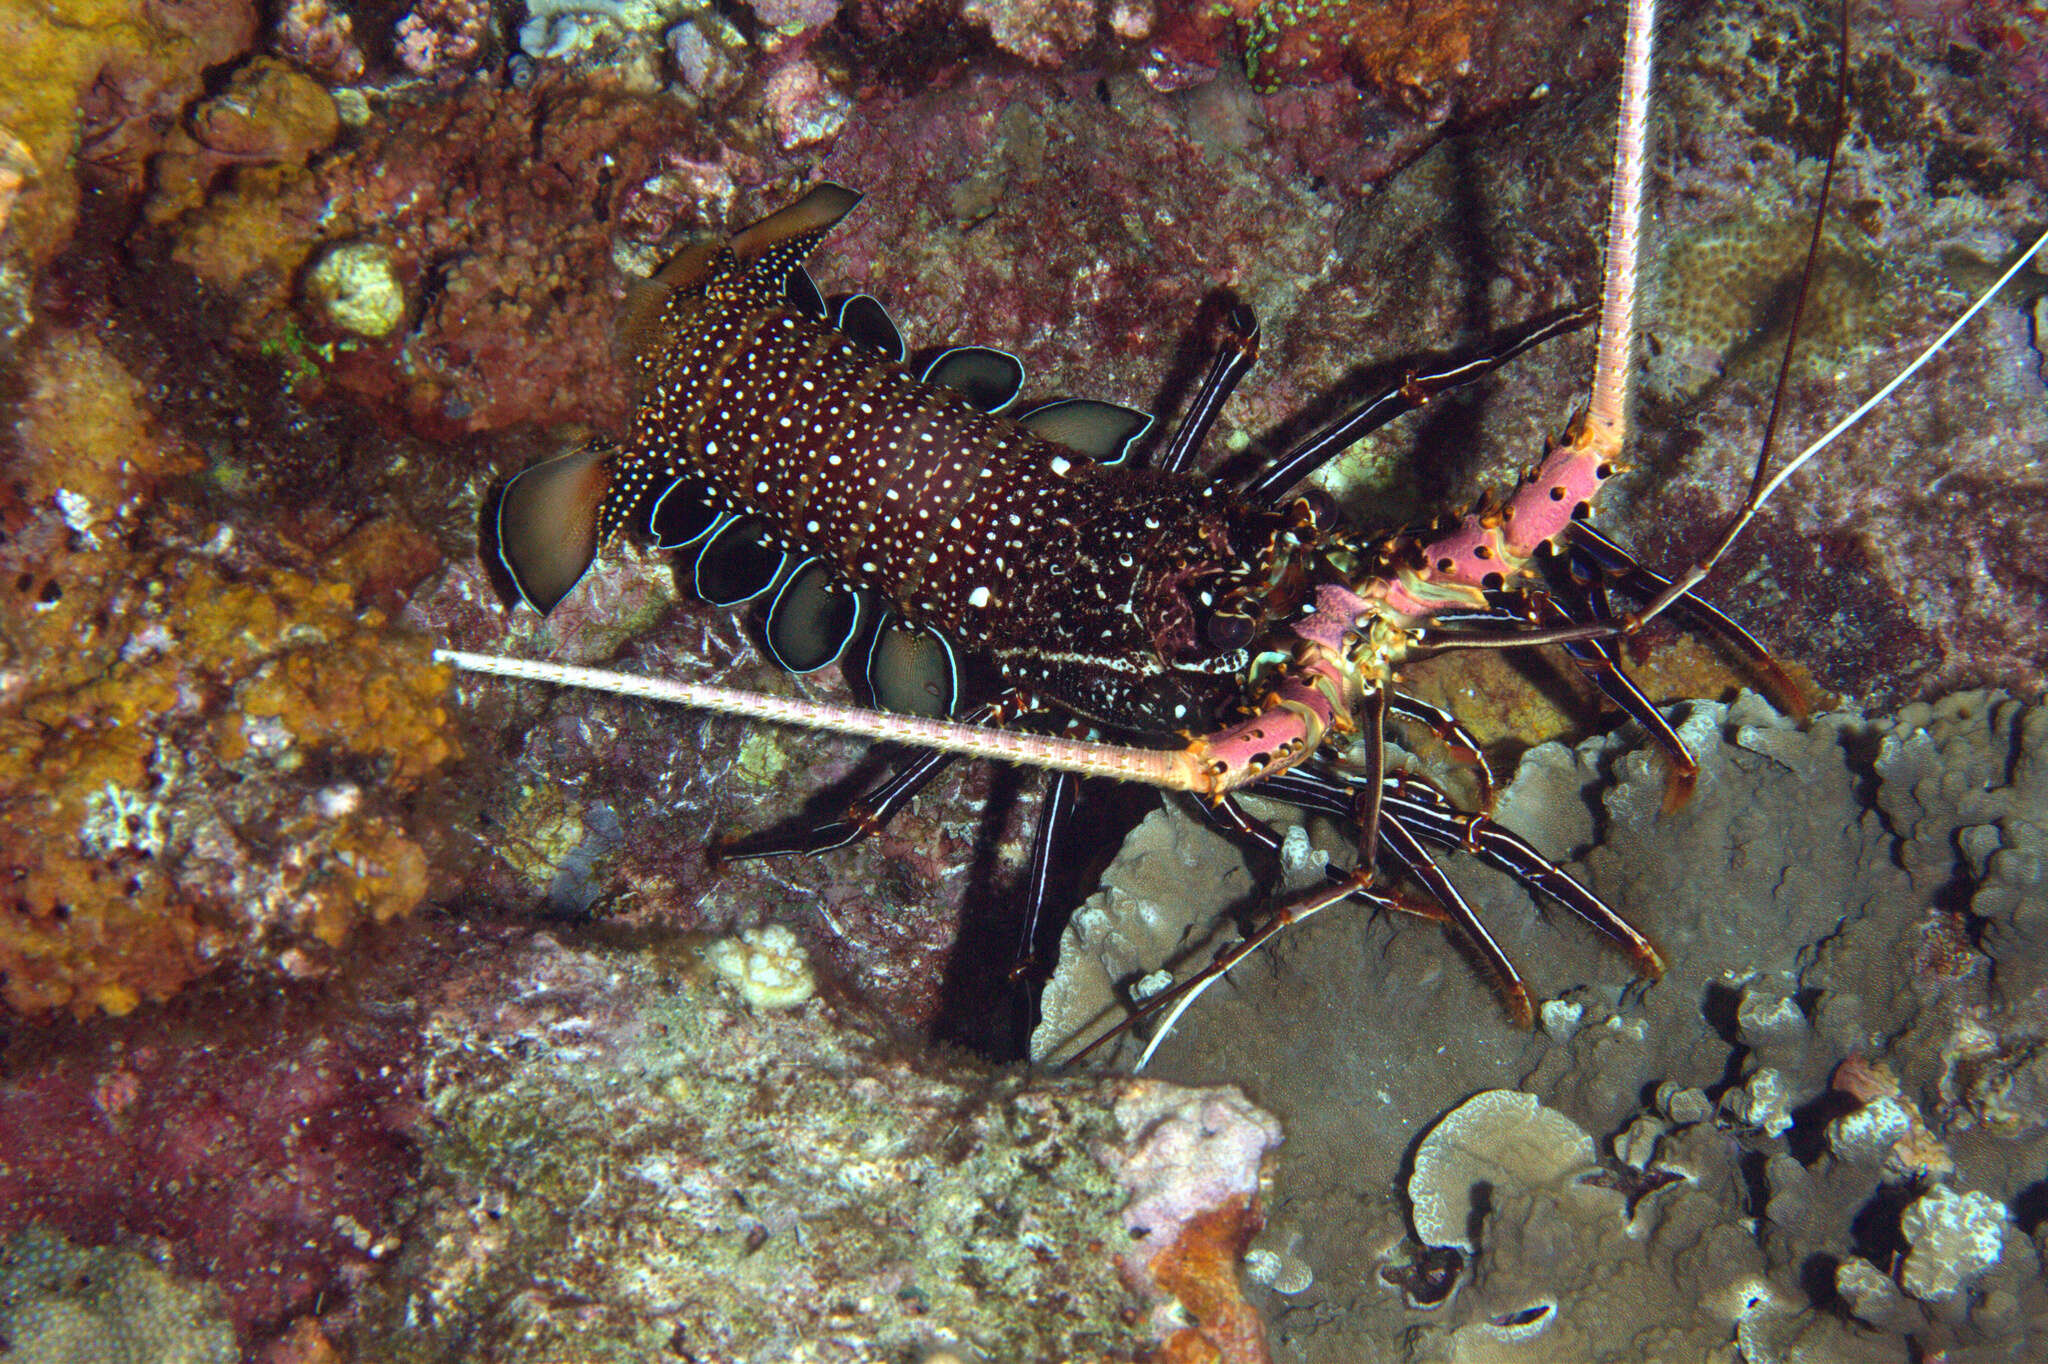 Image of Stripe-leg spiny lobster